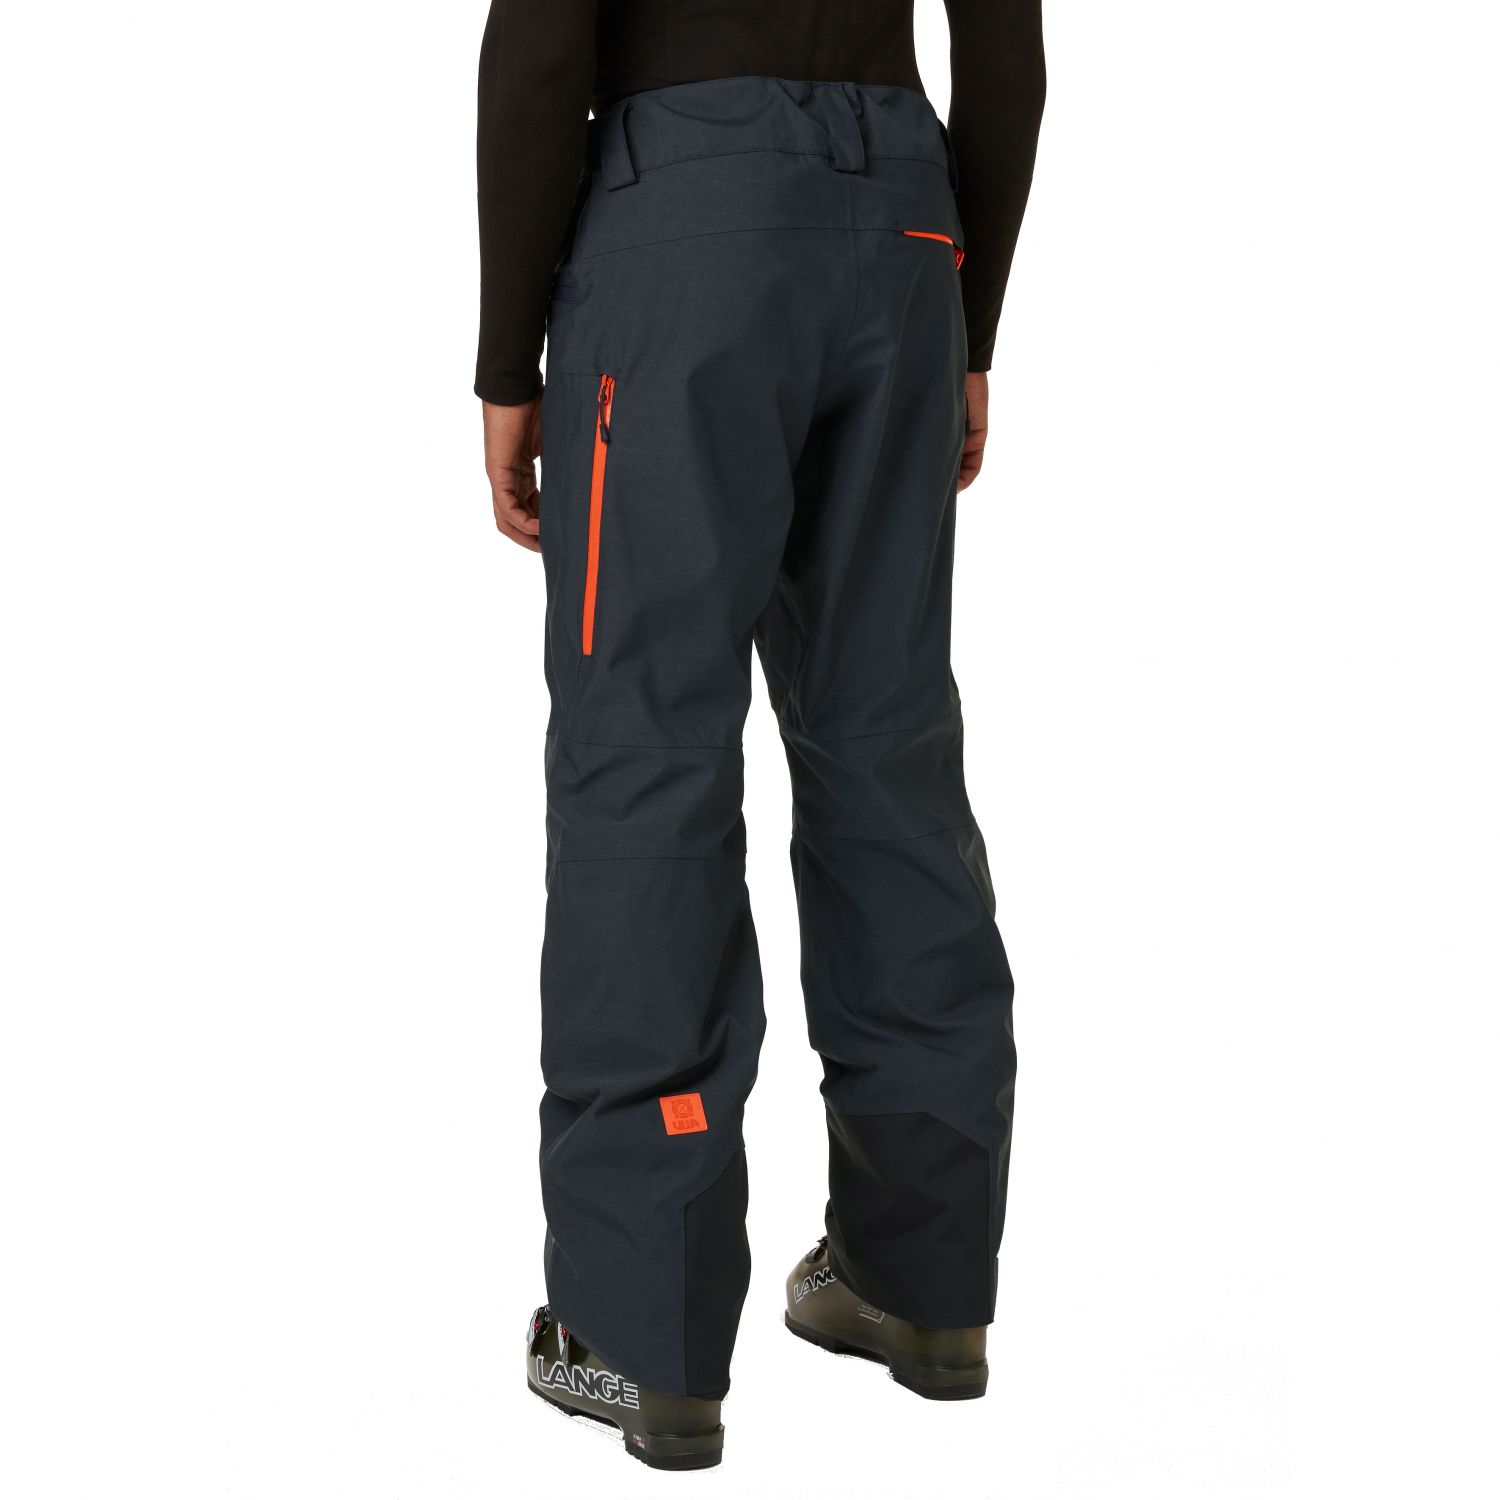 Helly Hansen Garibaldi 2.0 pantalons de ski, hommes, gris